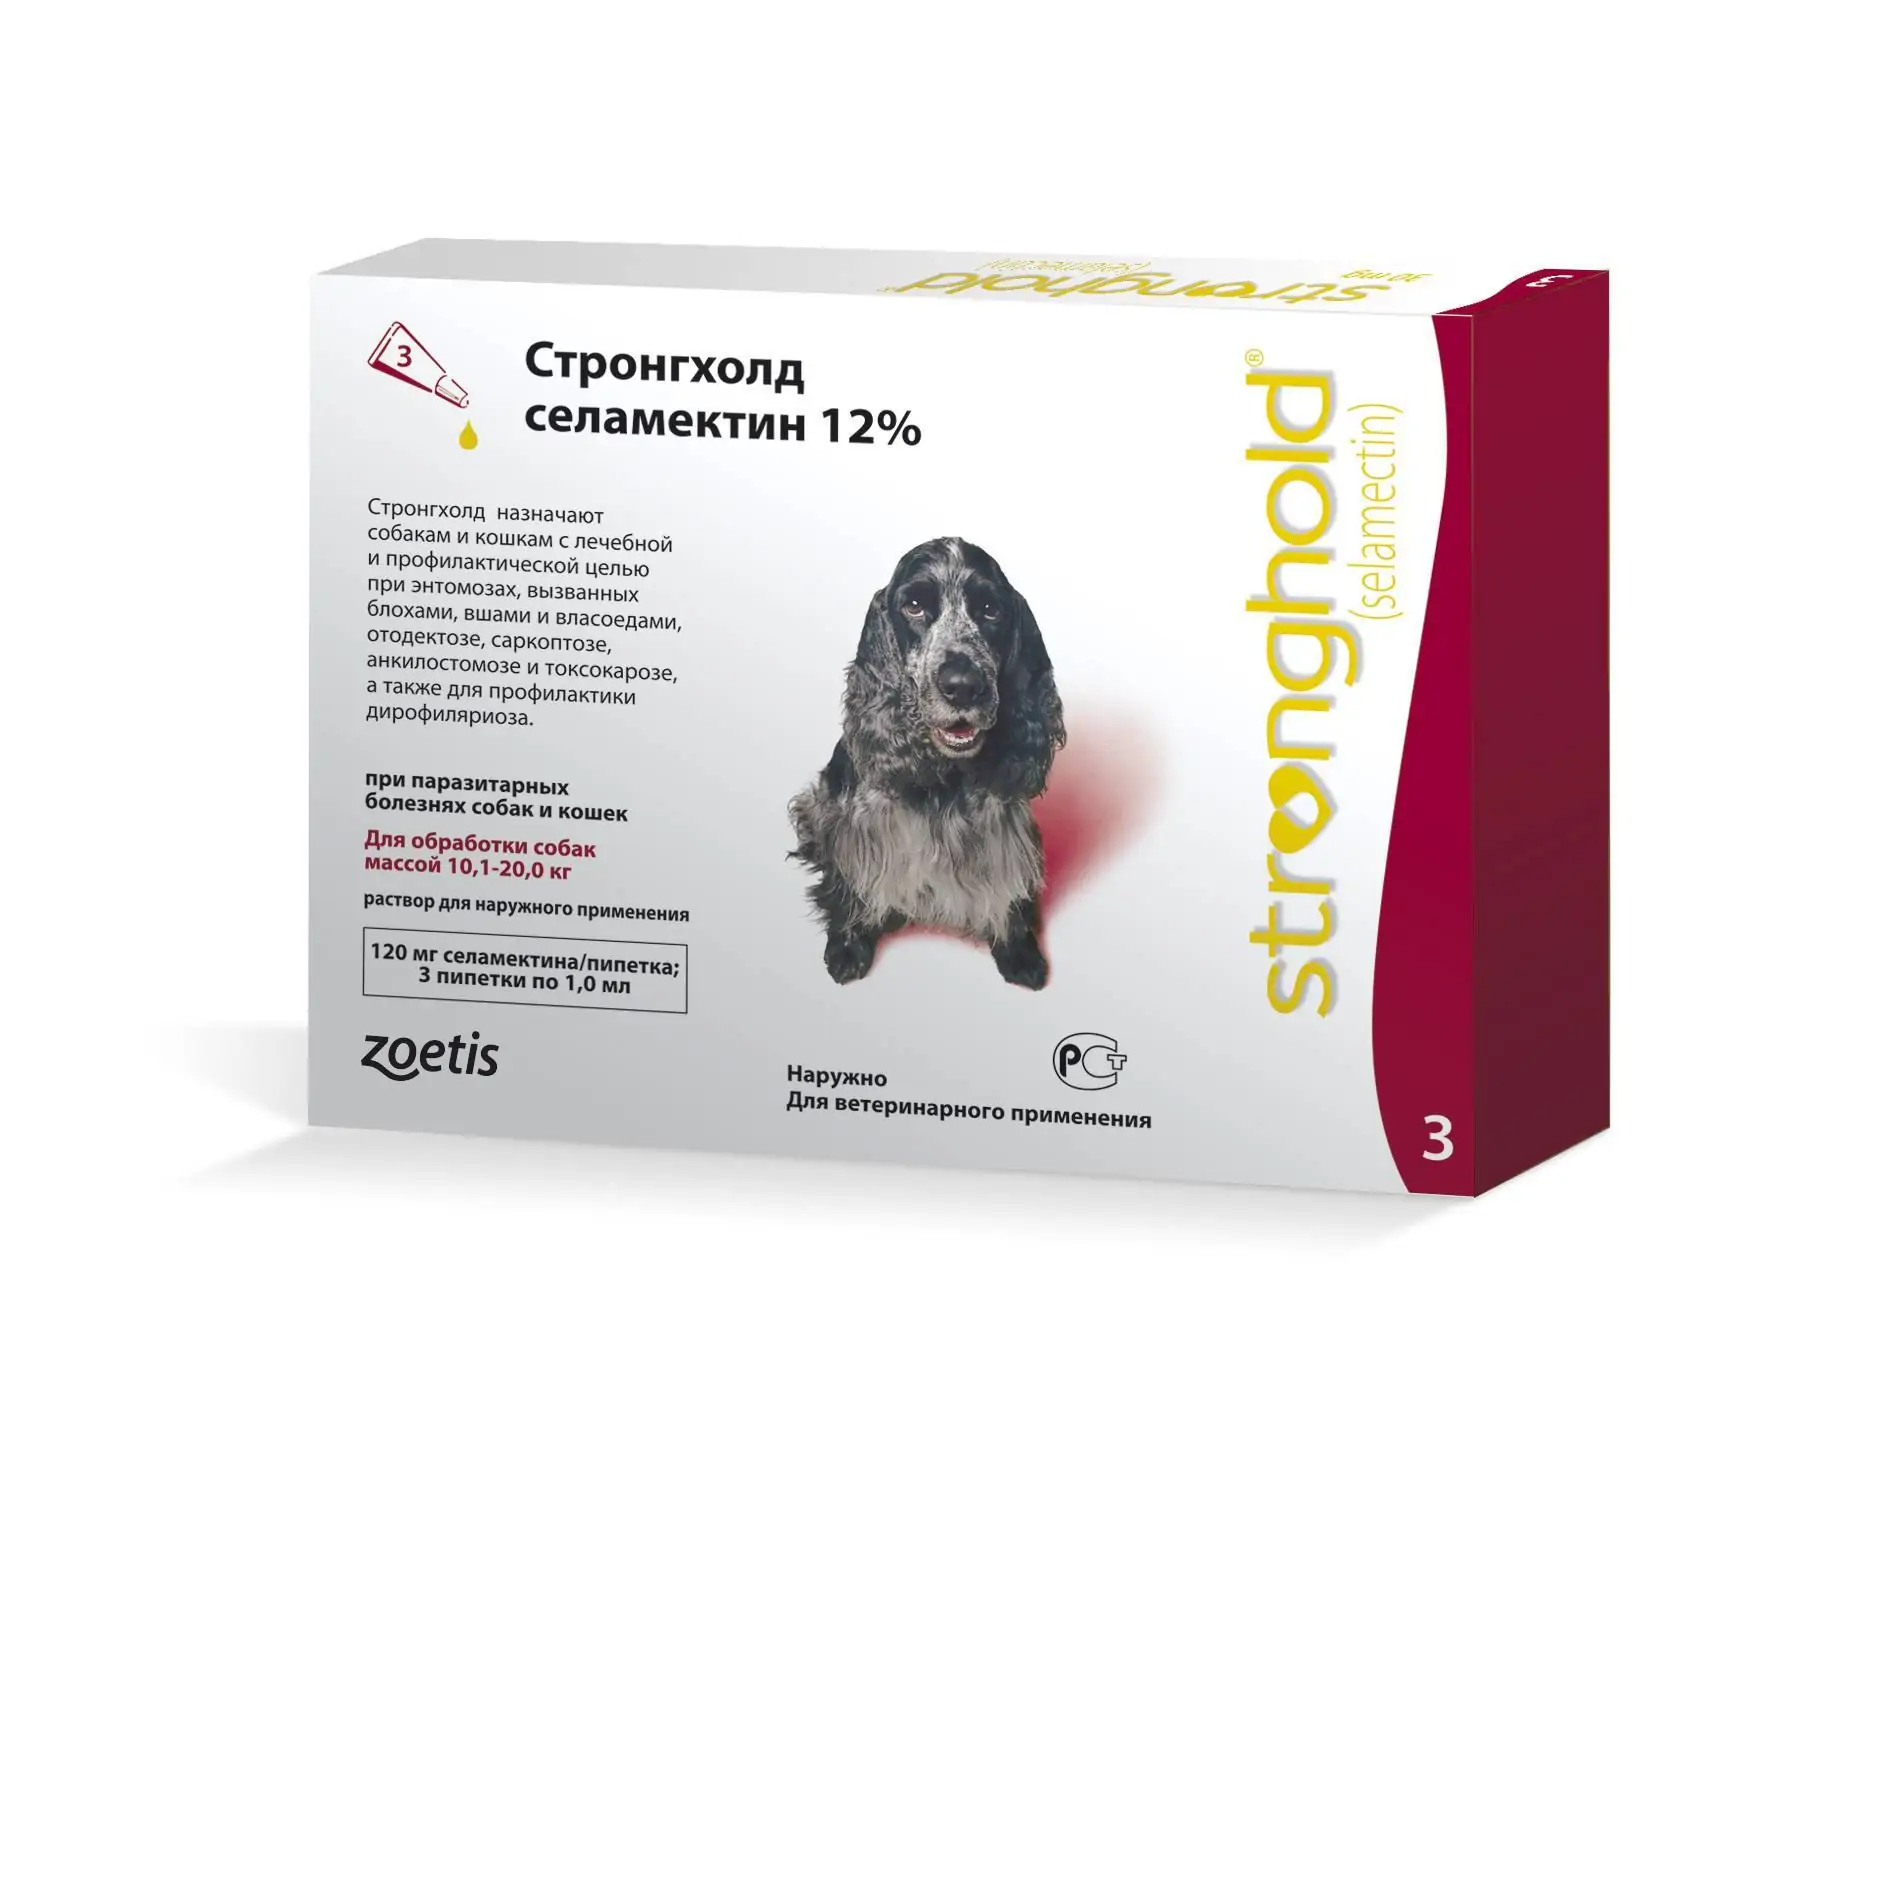 Стронгхолд 120 мг, для собак массой от 10,1 до 20 кг,  цена за 1 пипетку петдог